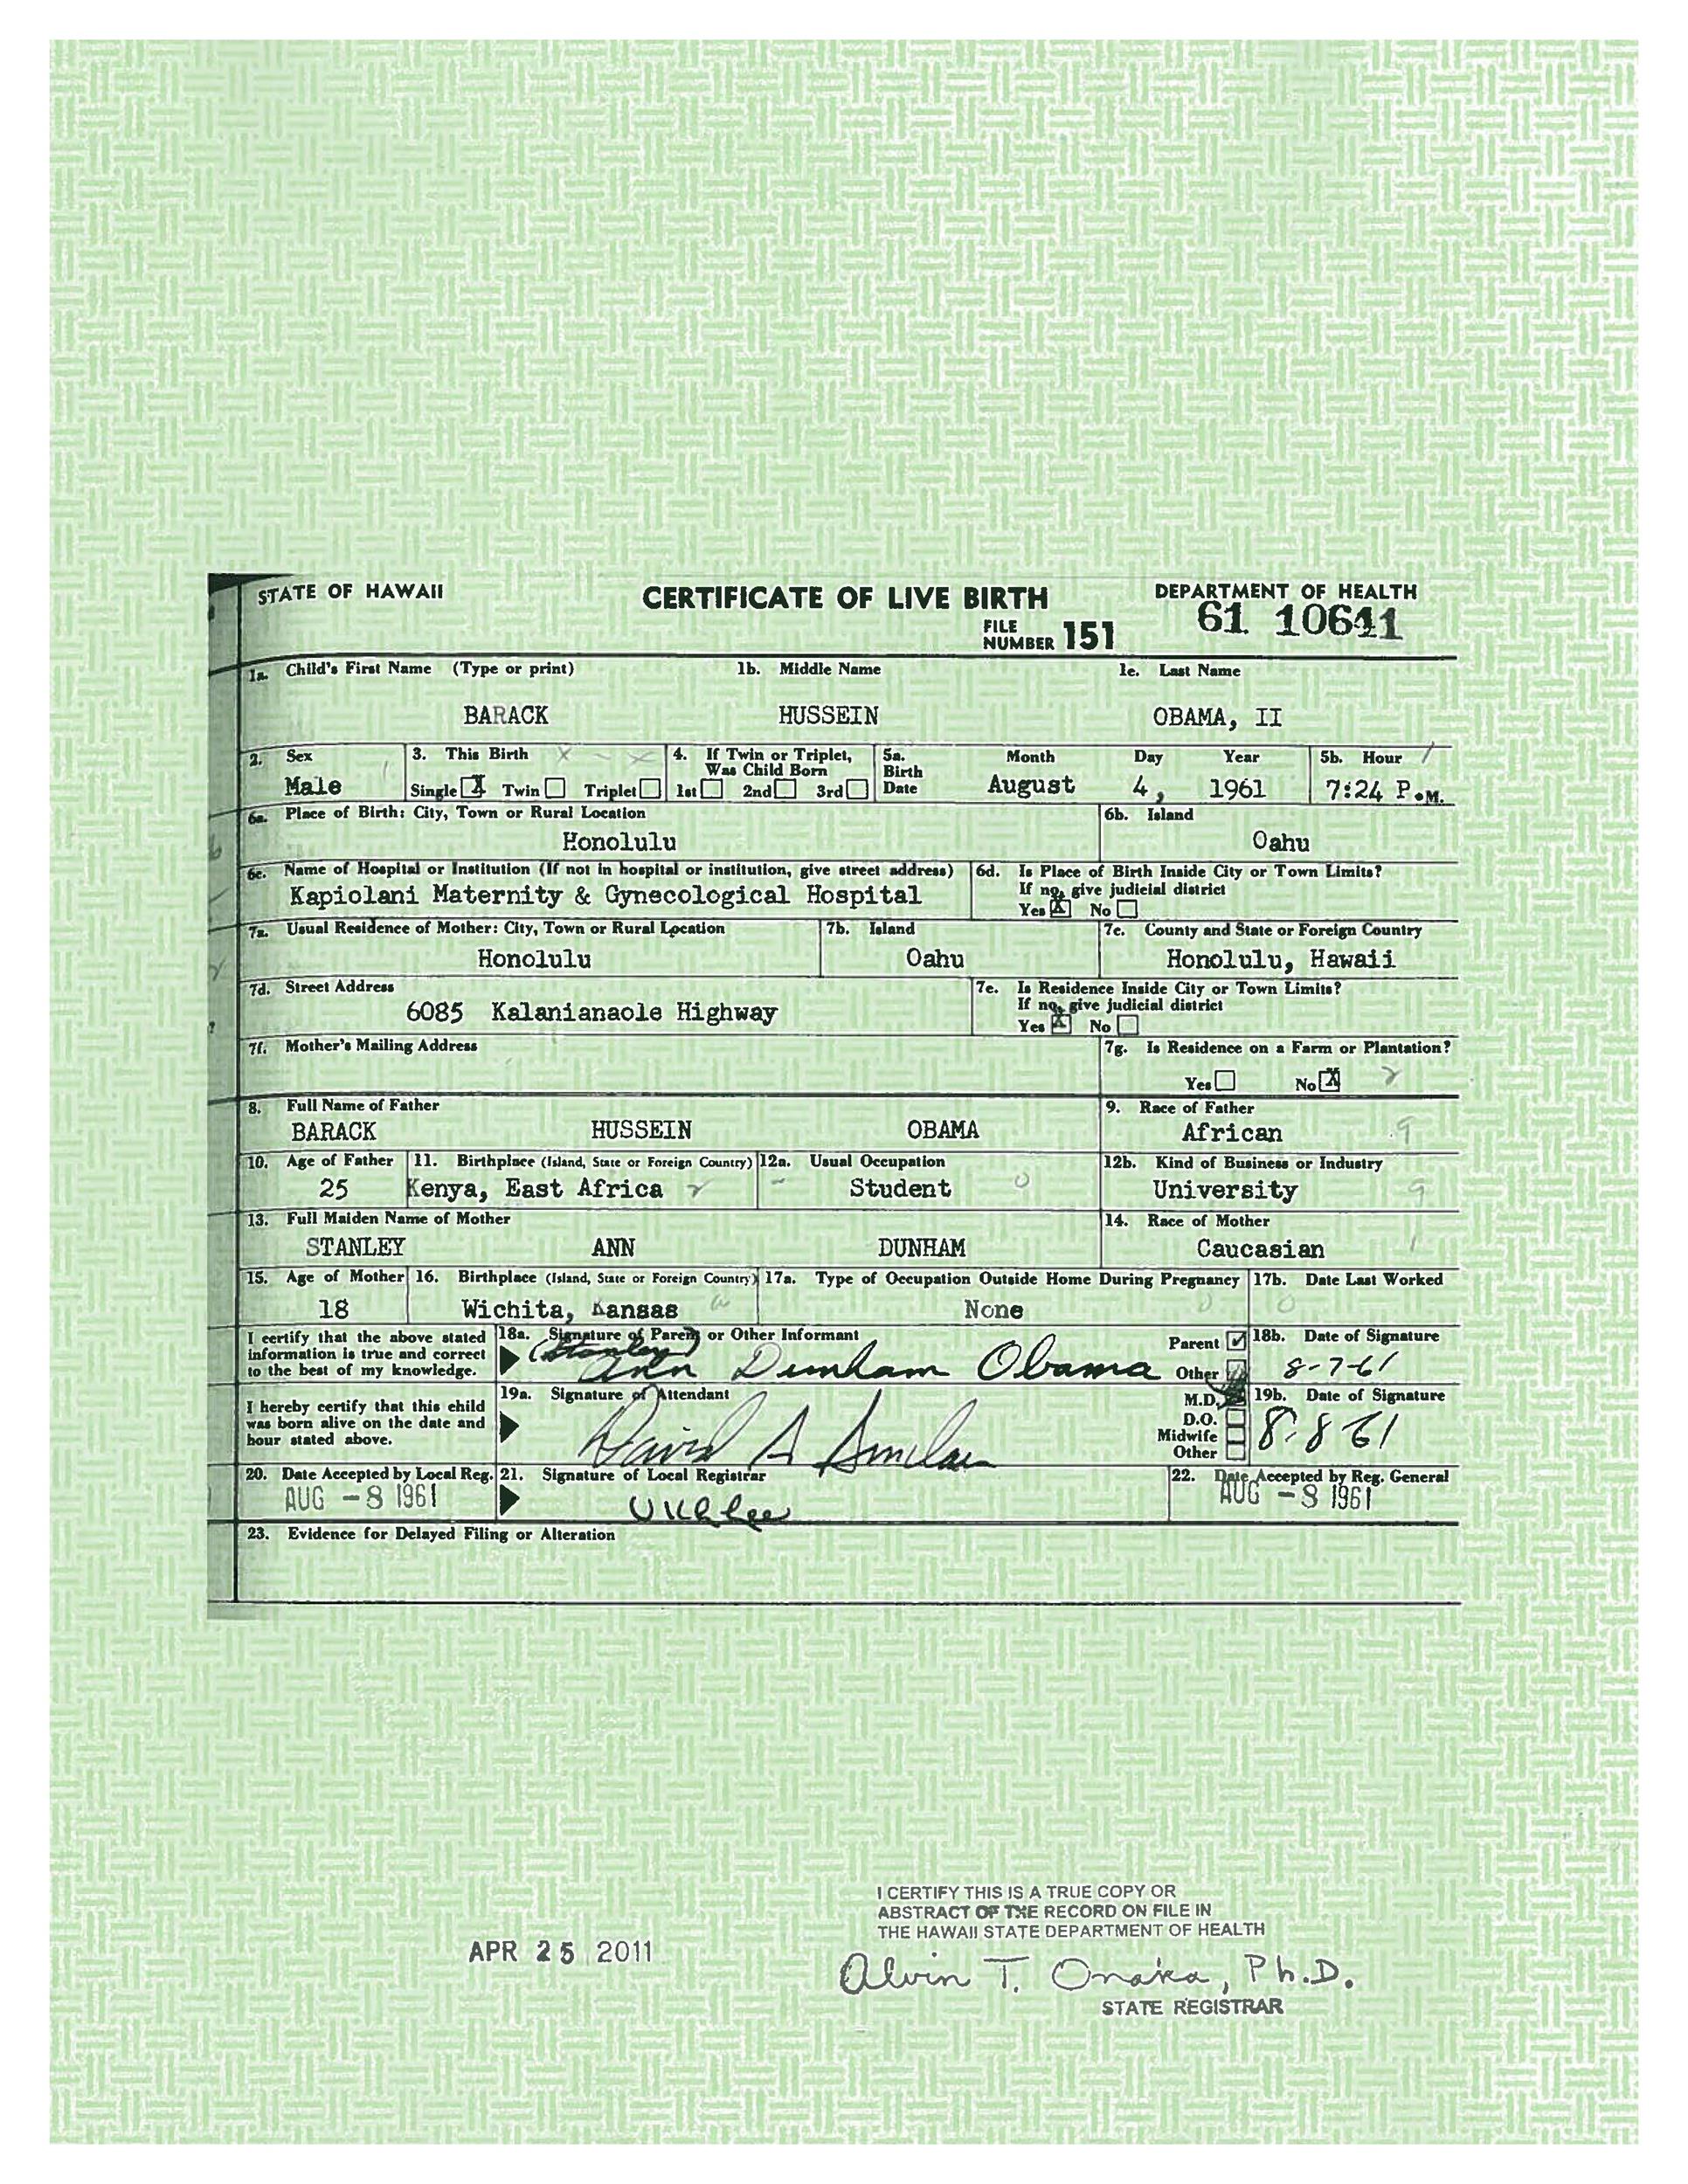 15-birth-certificate-templates-word-pdf-templatelab